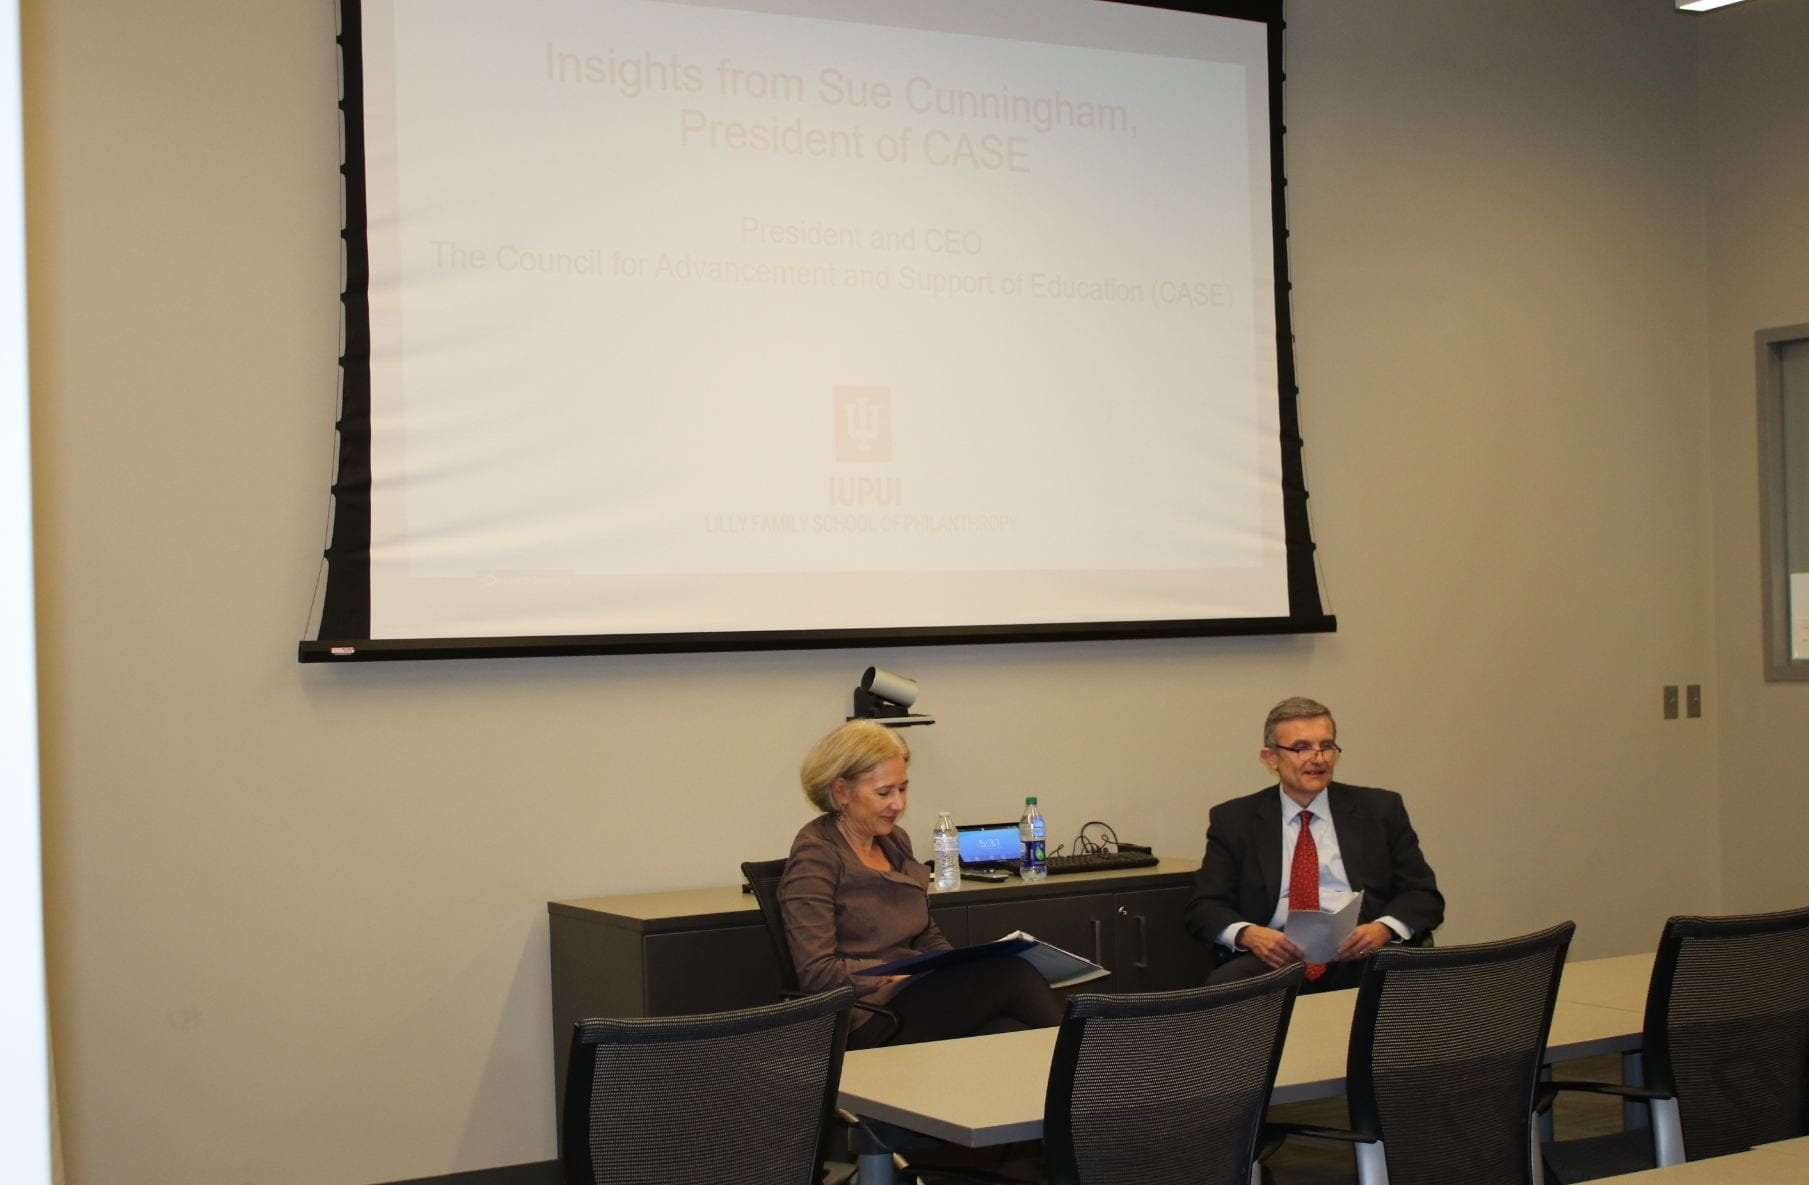 Sue Cunningham and Dean Amir Pasic discuss higher education fundraising. 